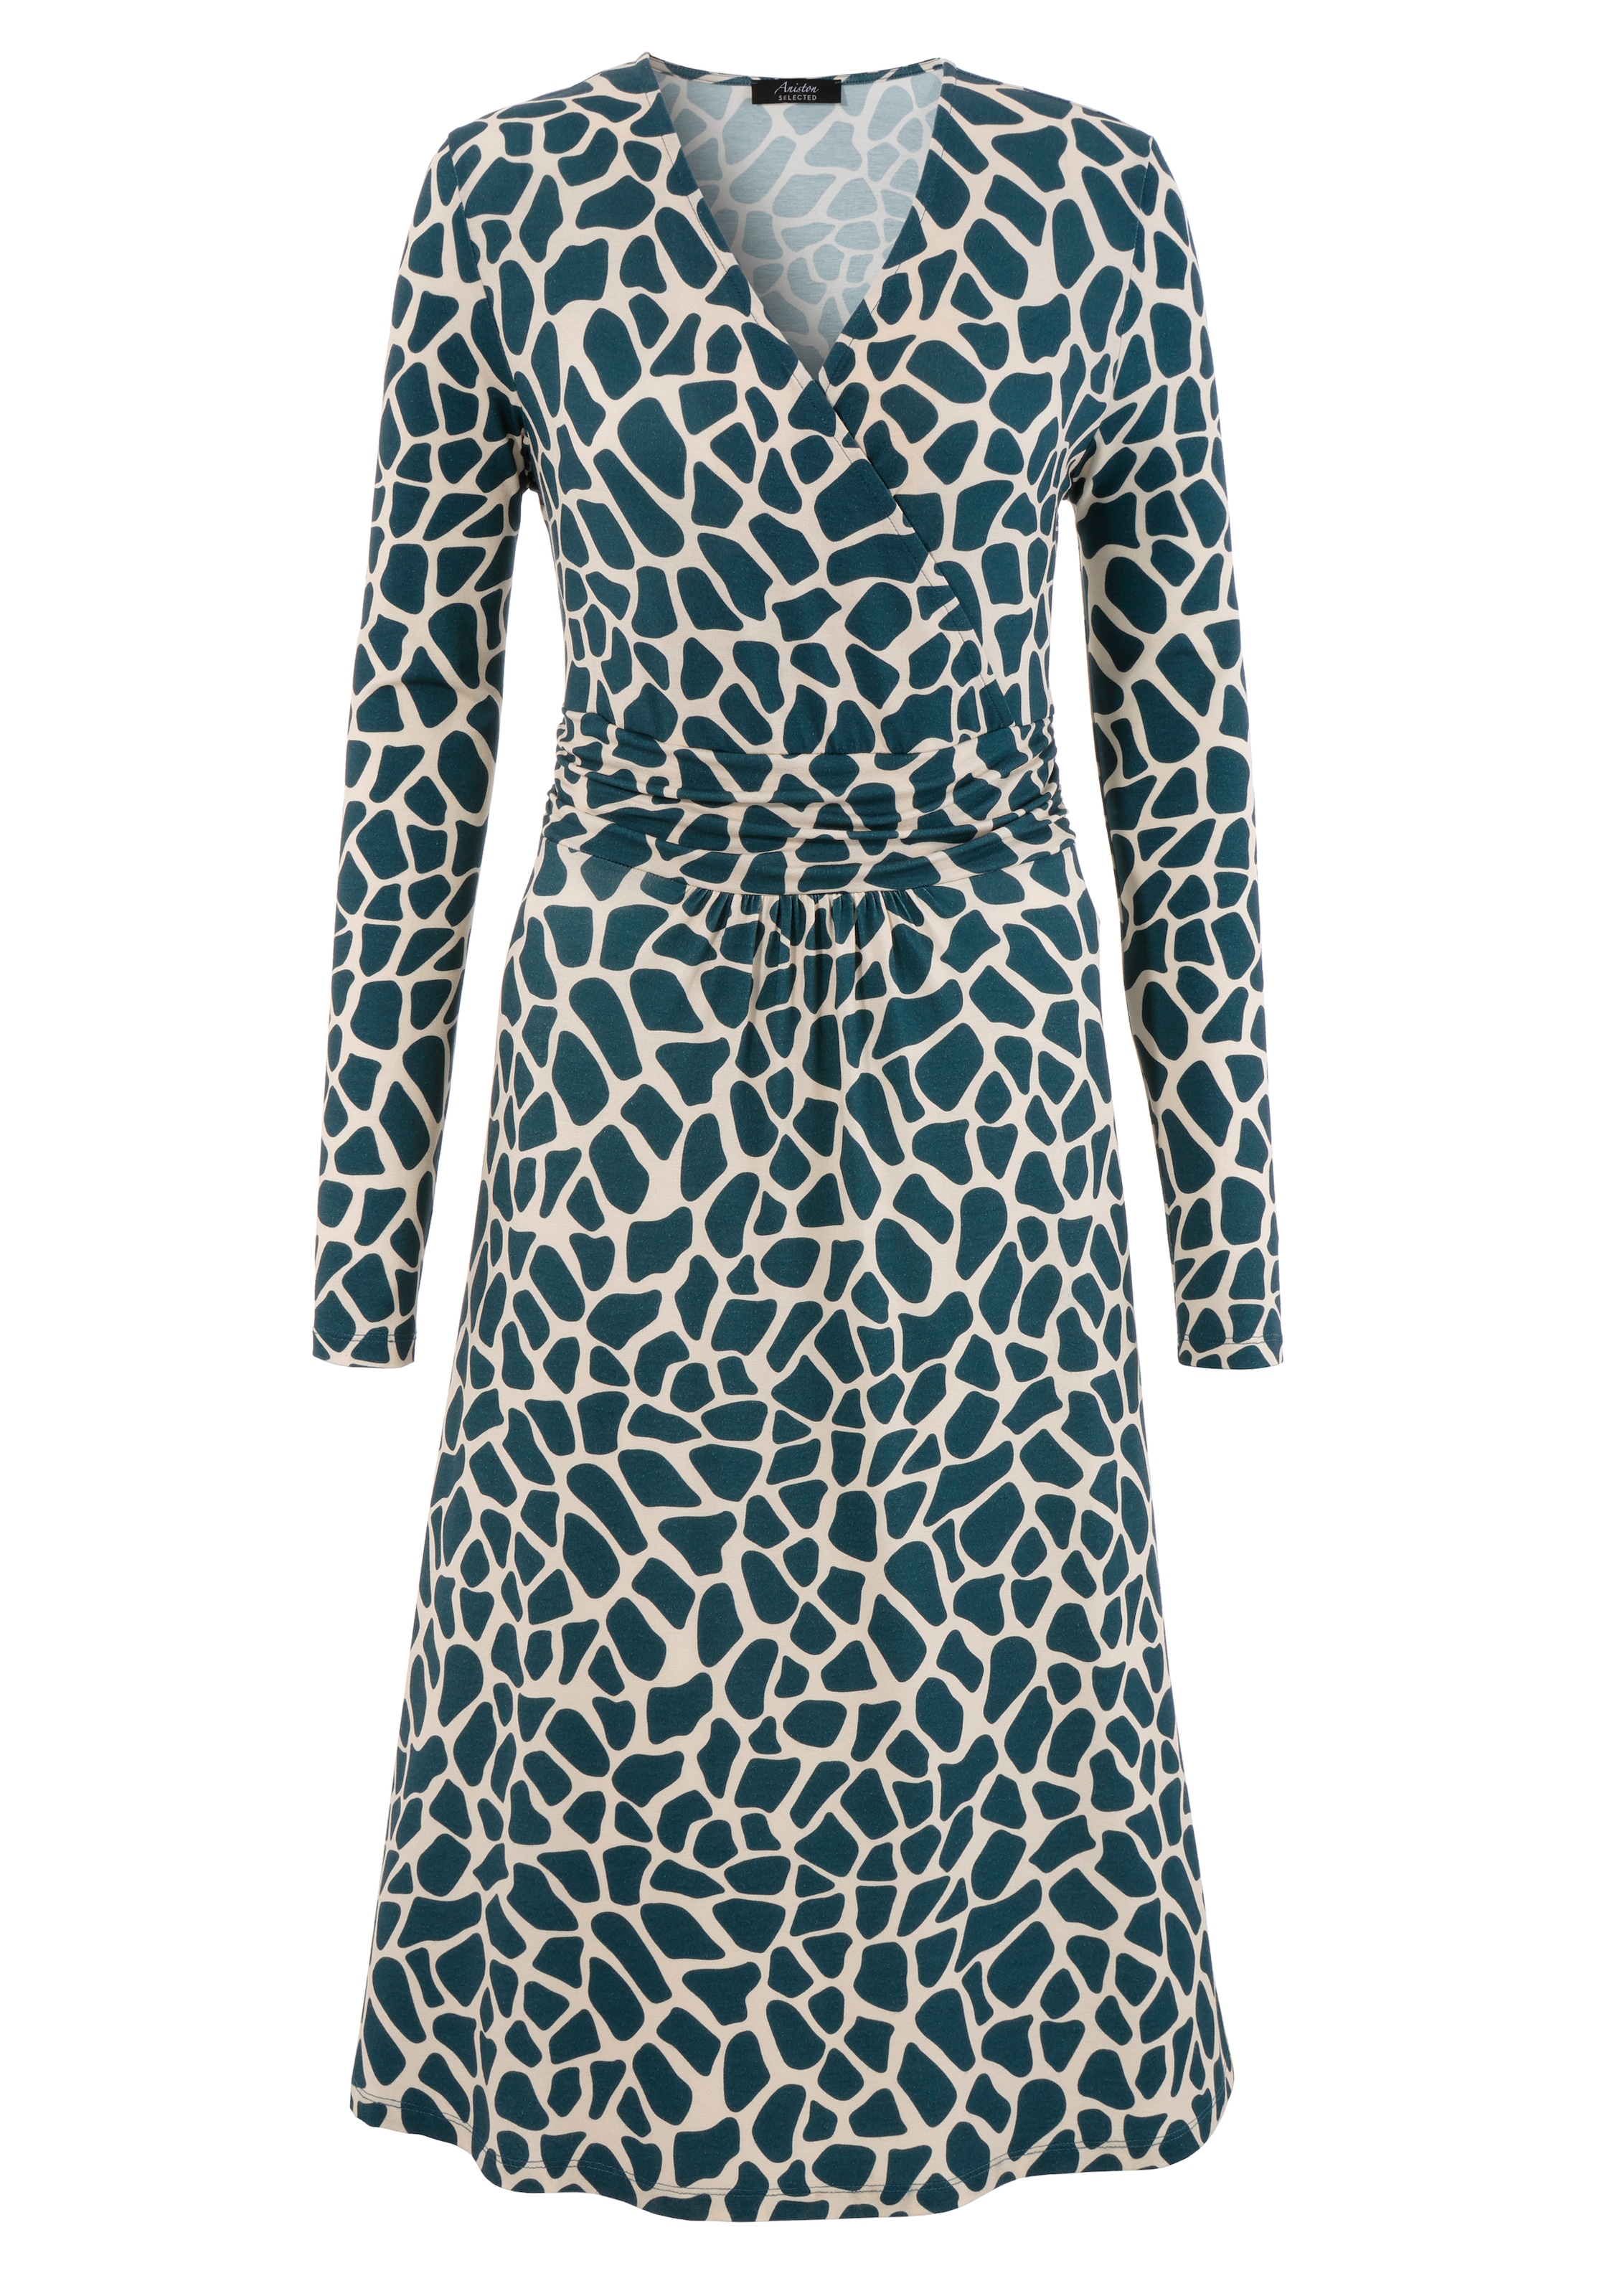 Aniston SELECTED Jerseykleid, mit farbigem kaufen animal-print